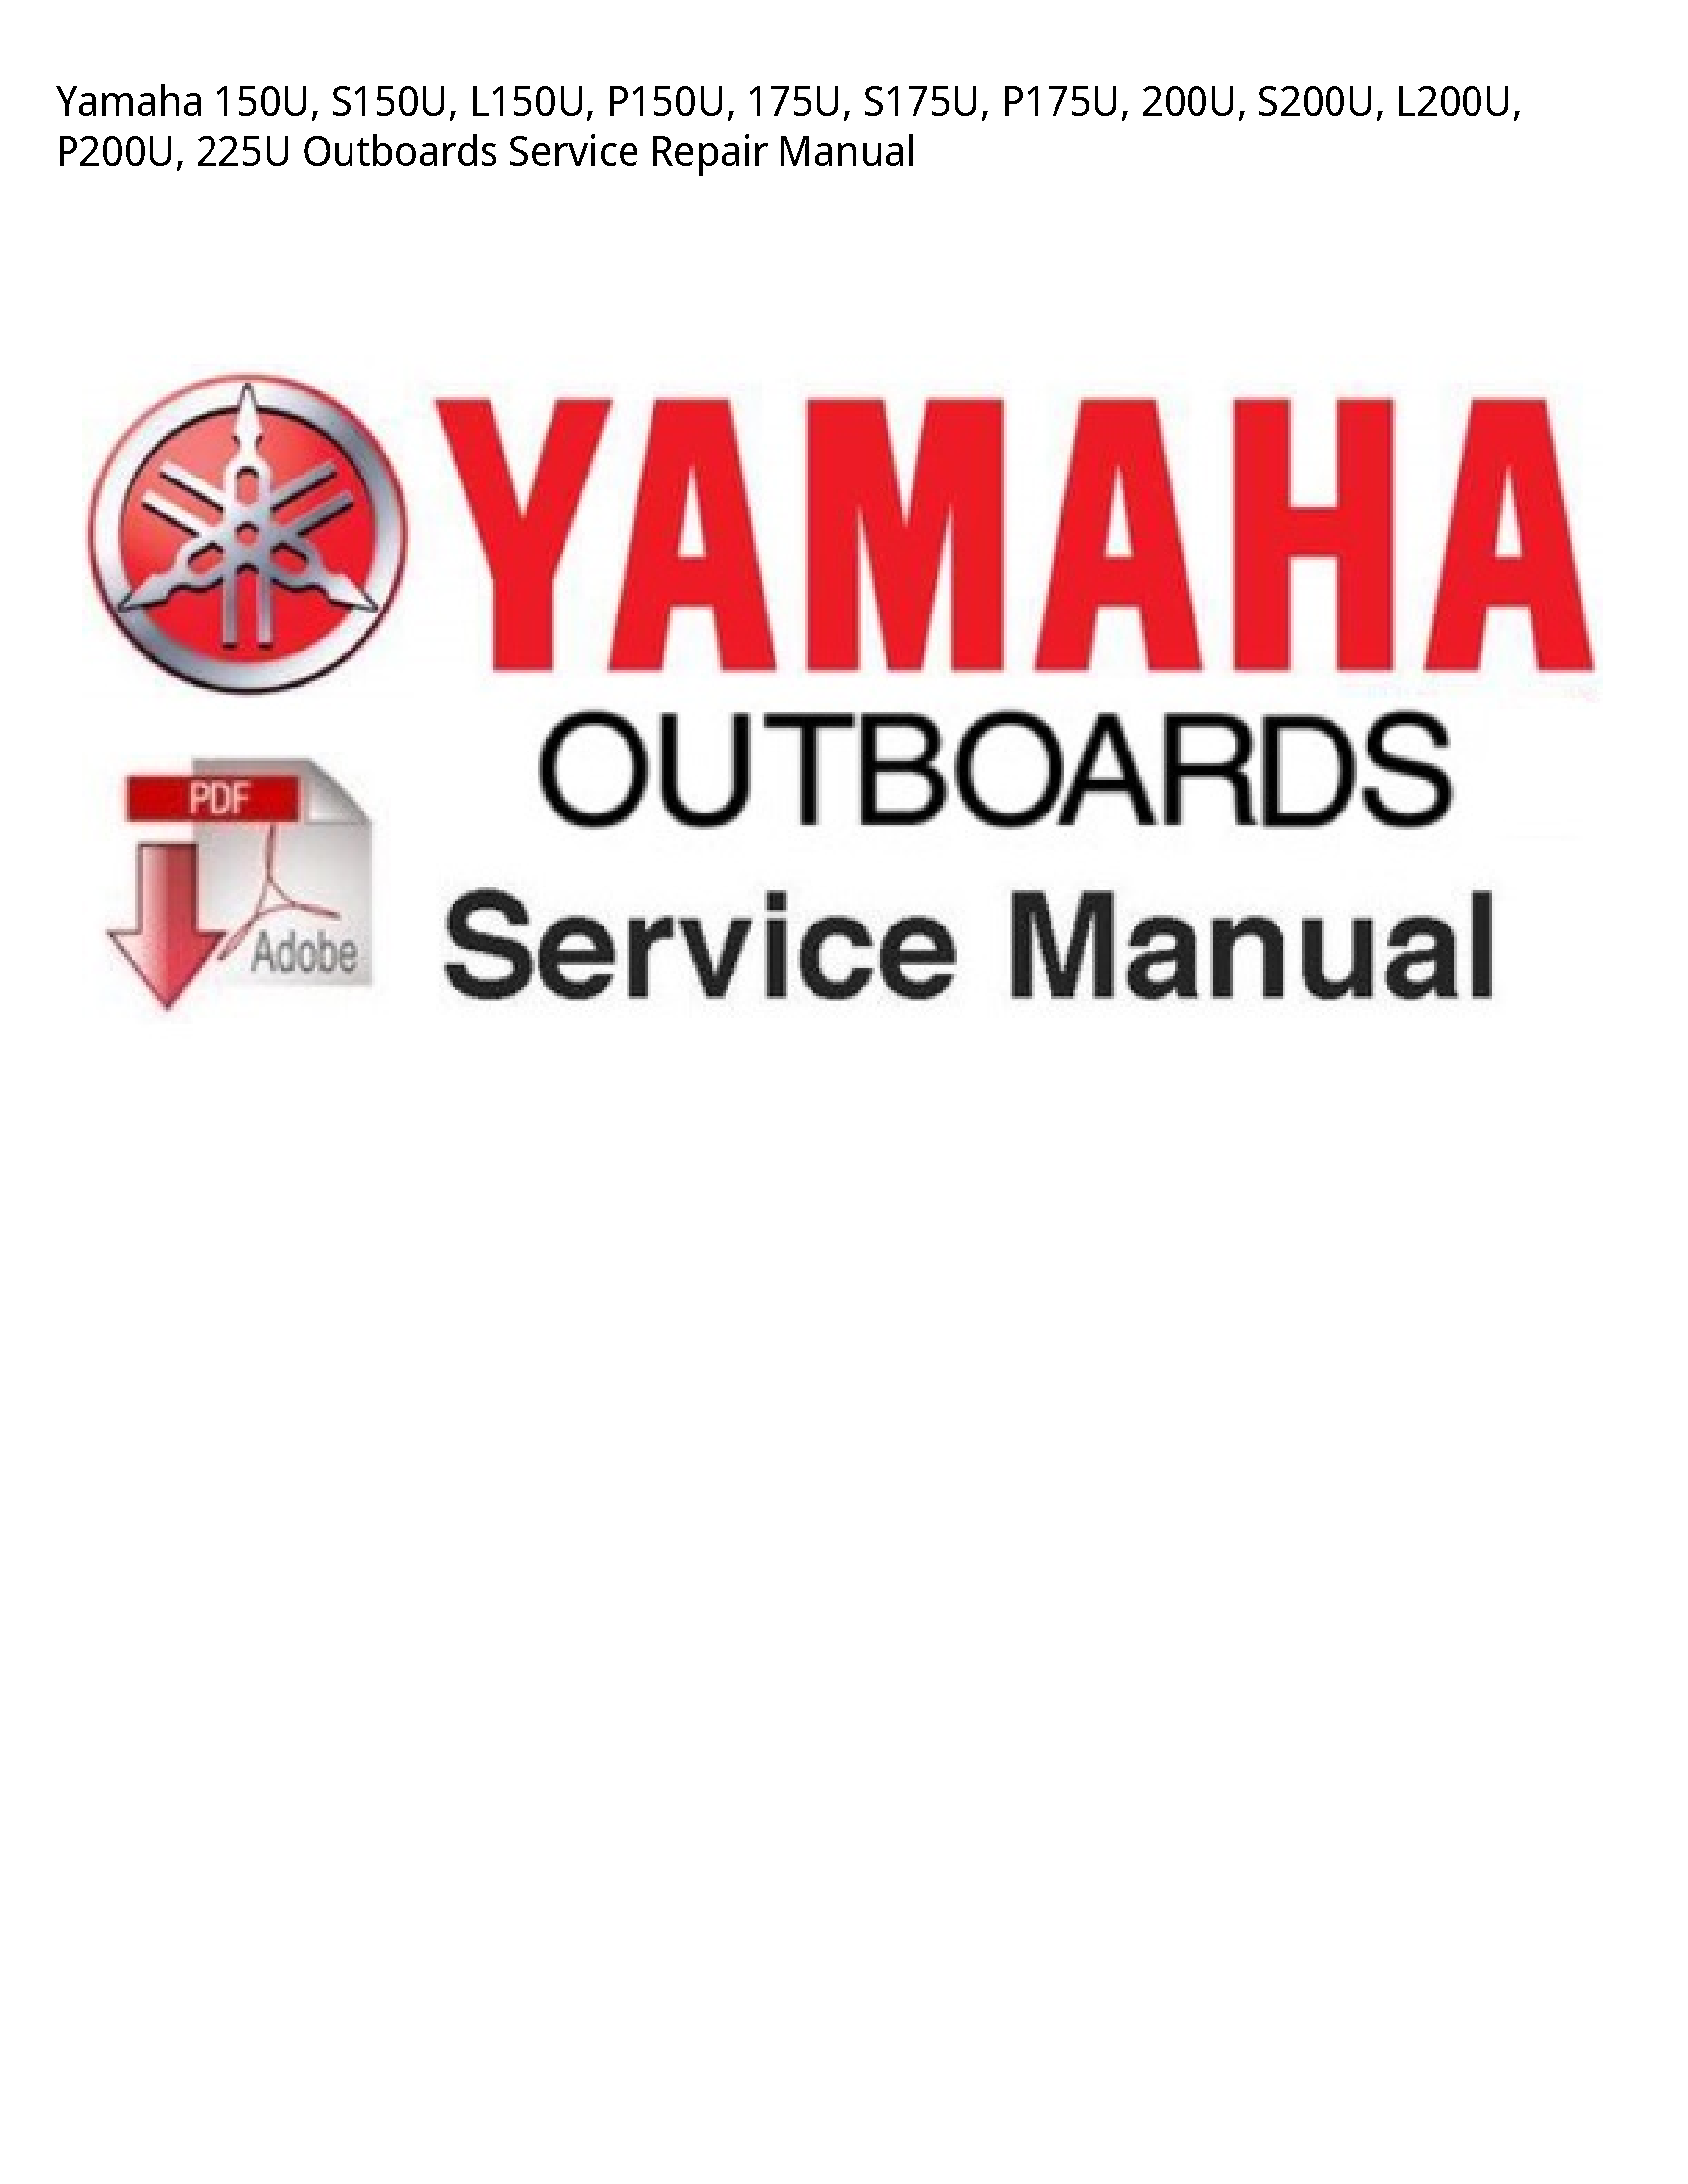 Yamaha 150U Outboards manual